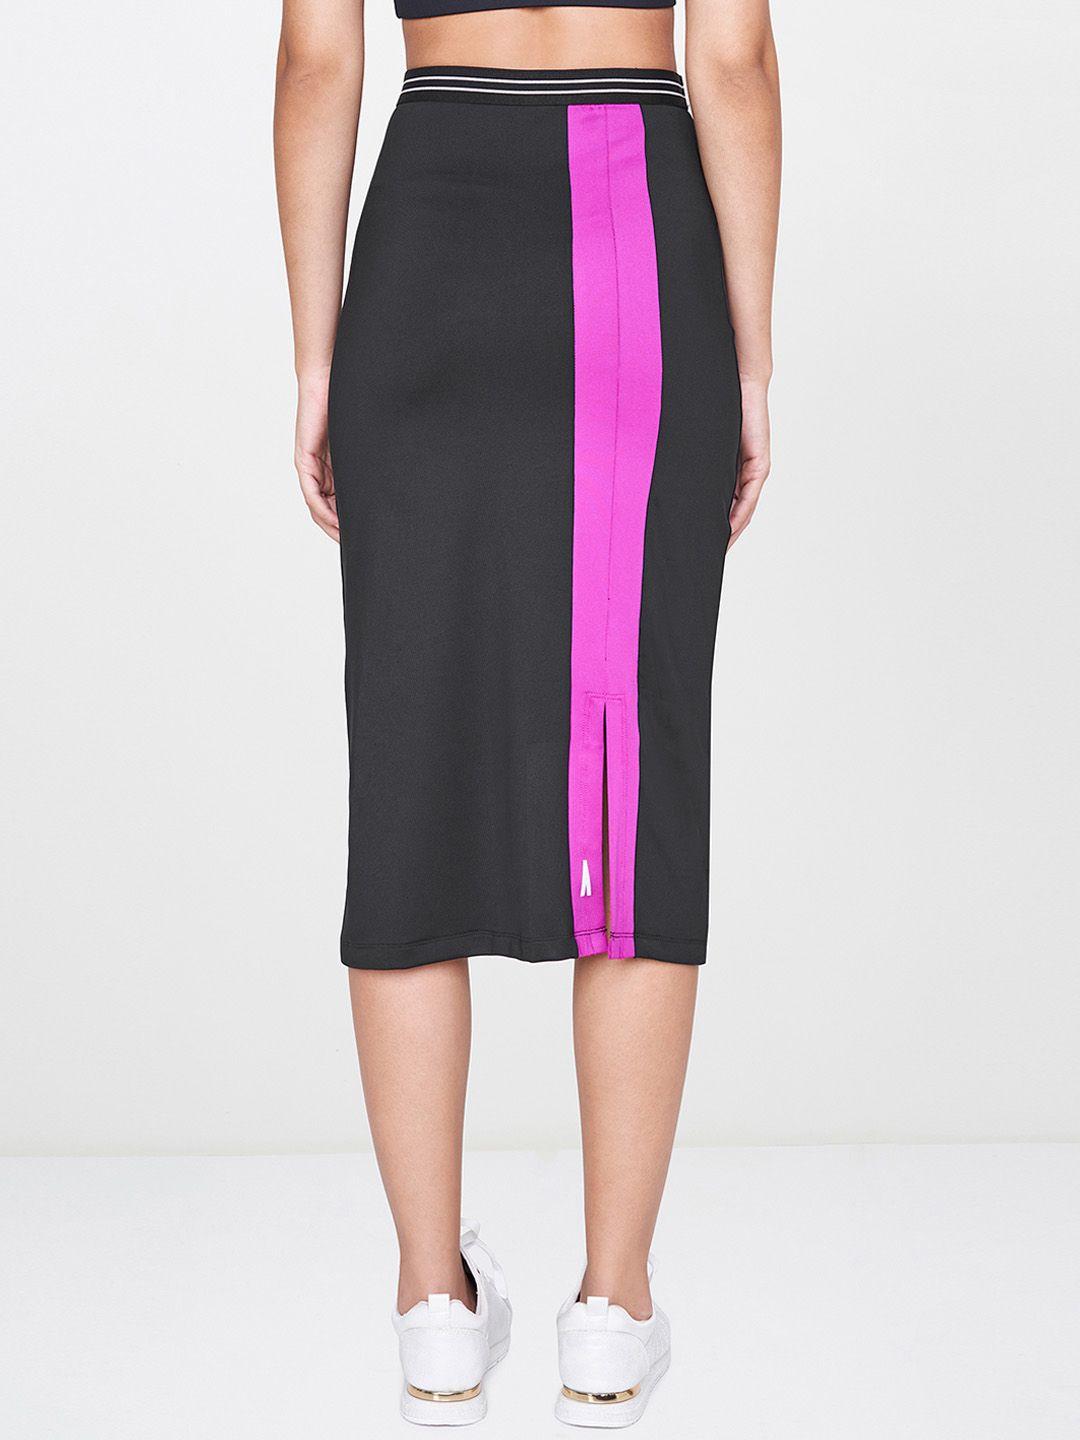 and-women-black-&-magenta-solid-midi-length-activewear-pencil-skirt